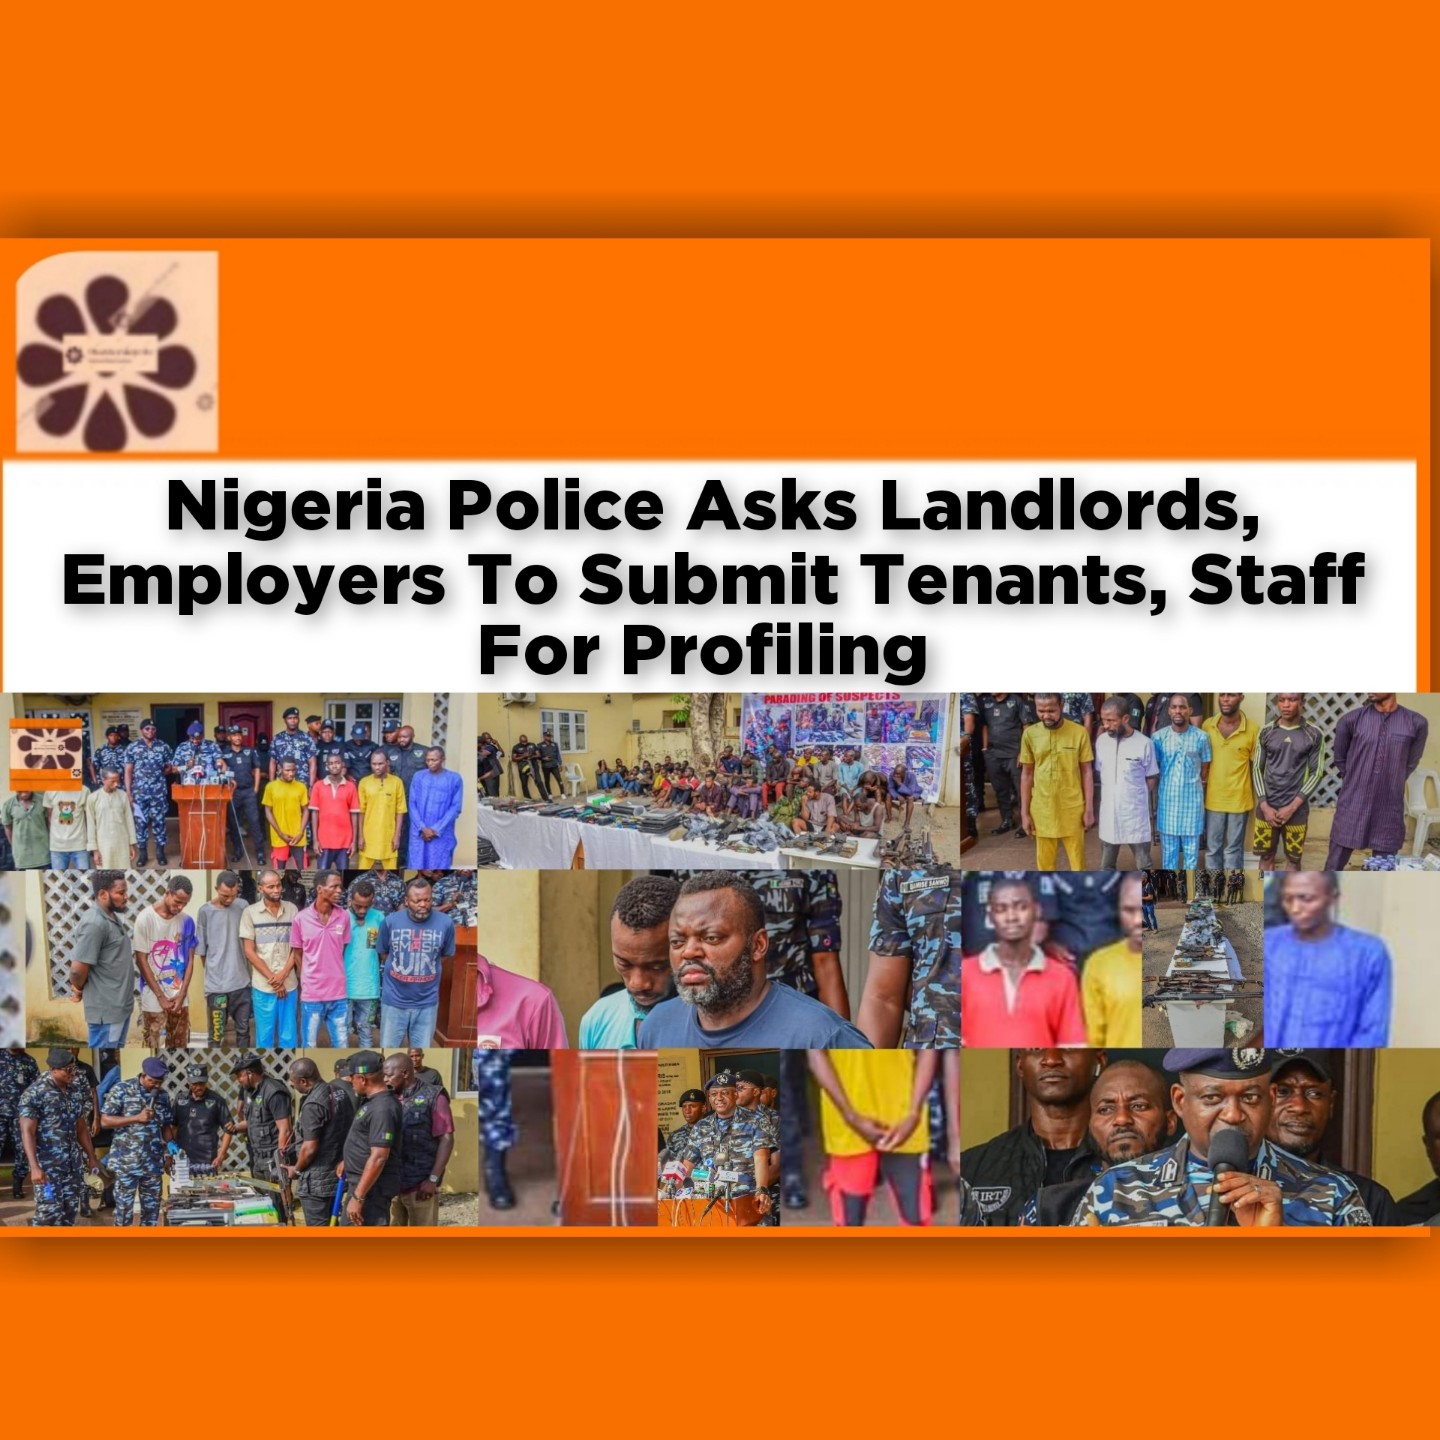 Nigeria Police Asks Landlords, Employers To Submit Tenants, Staff For Profiling ~ OsazuwaAkonedo #Atiku